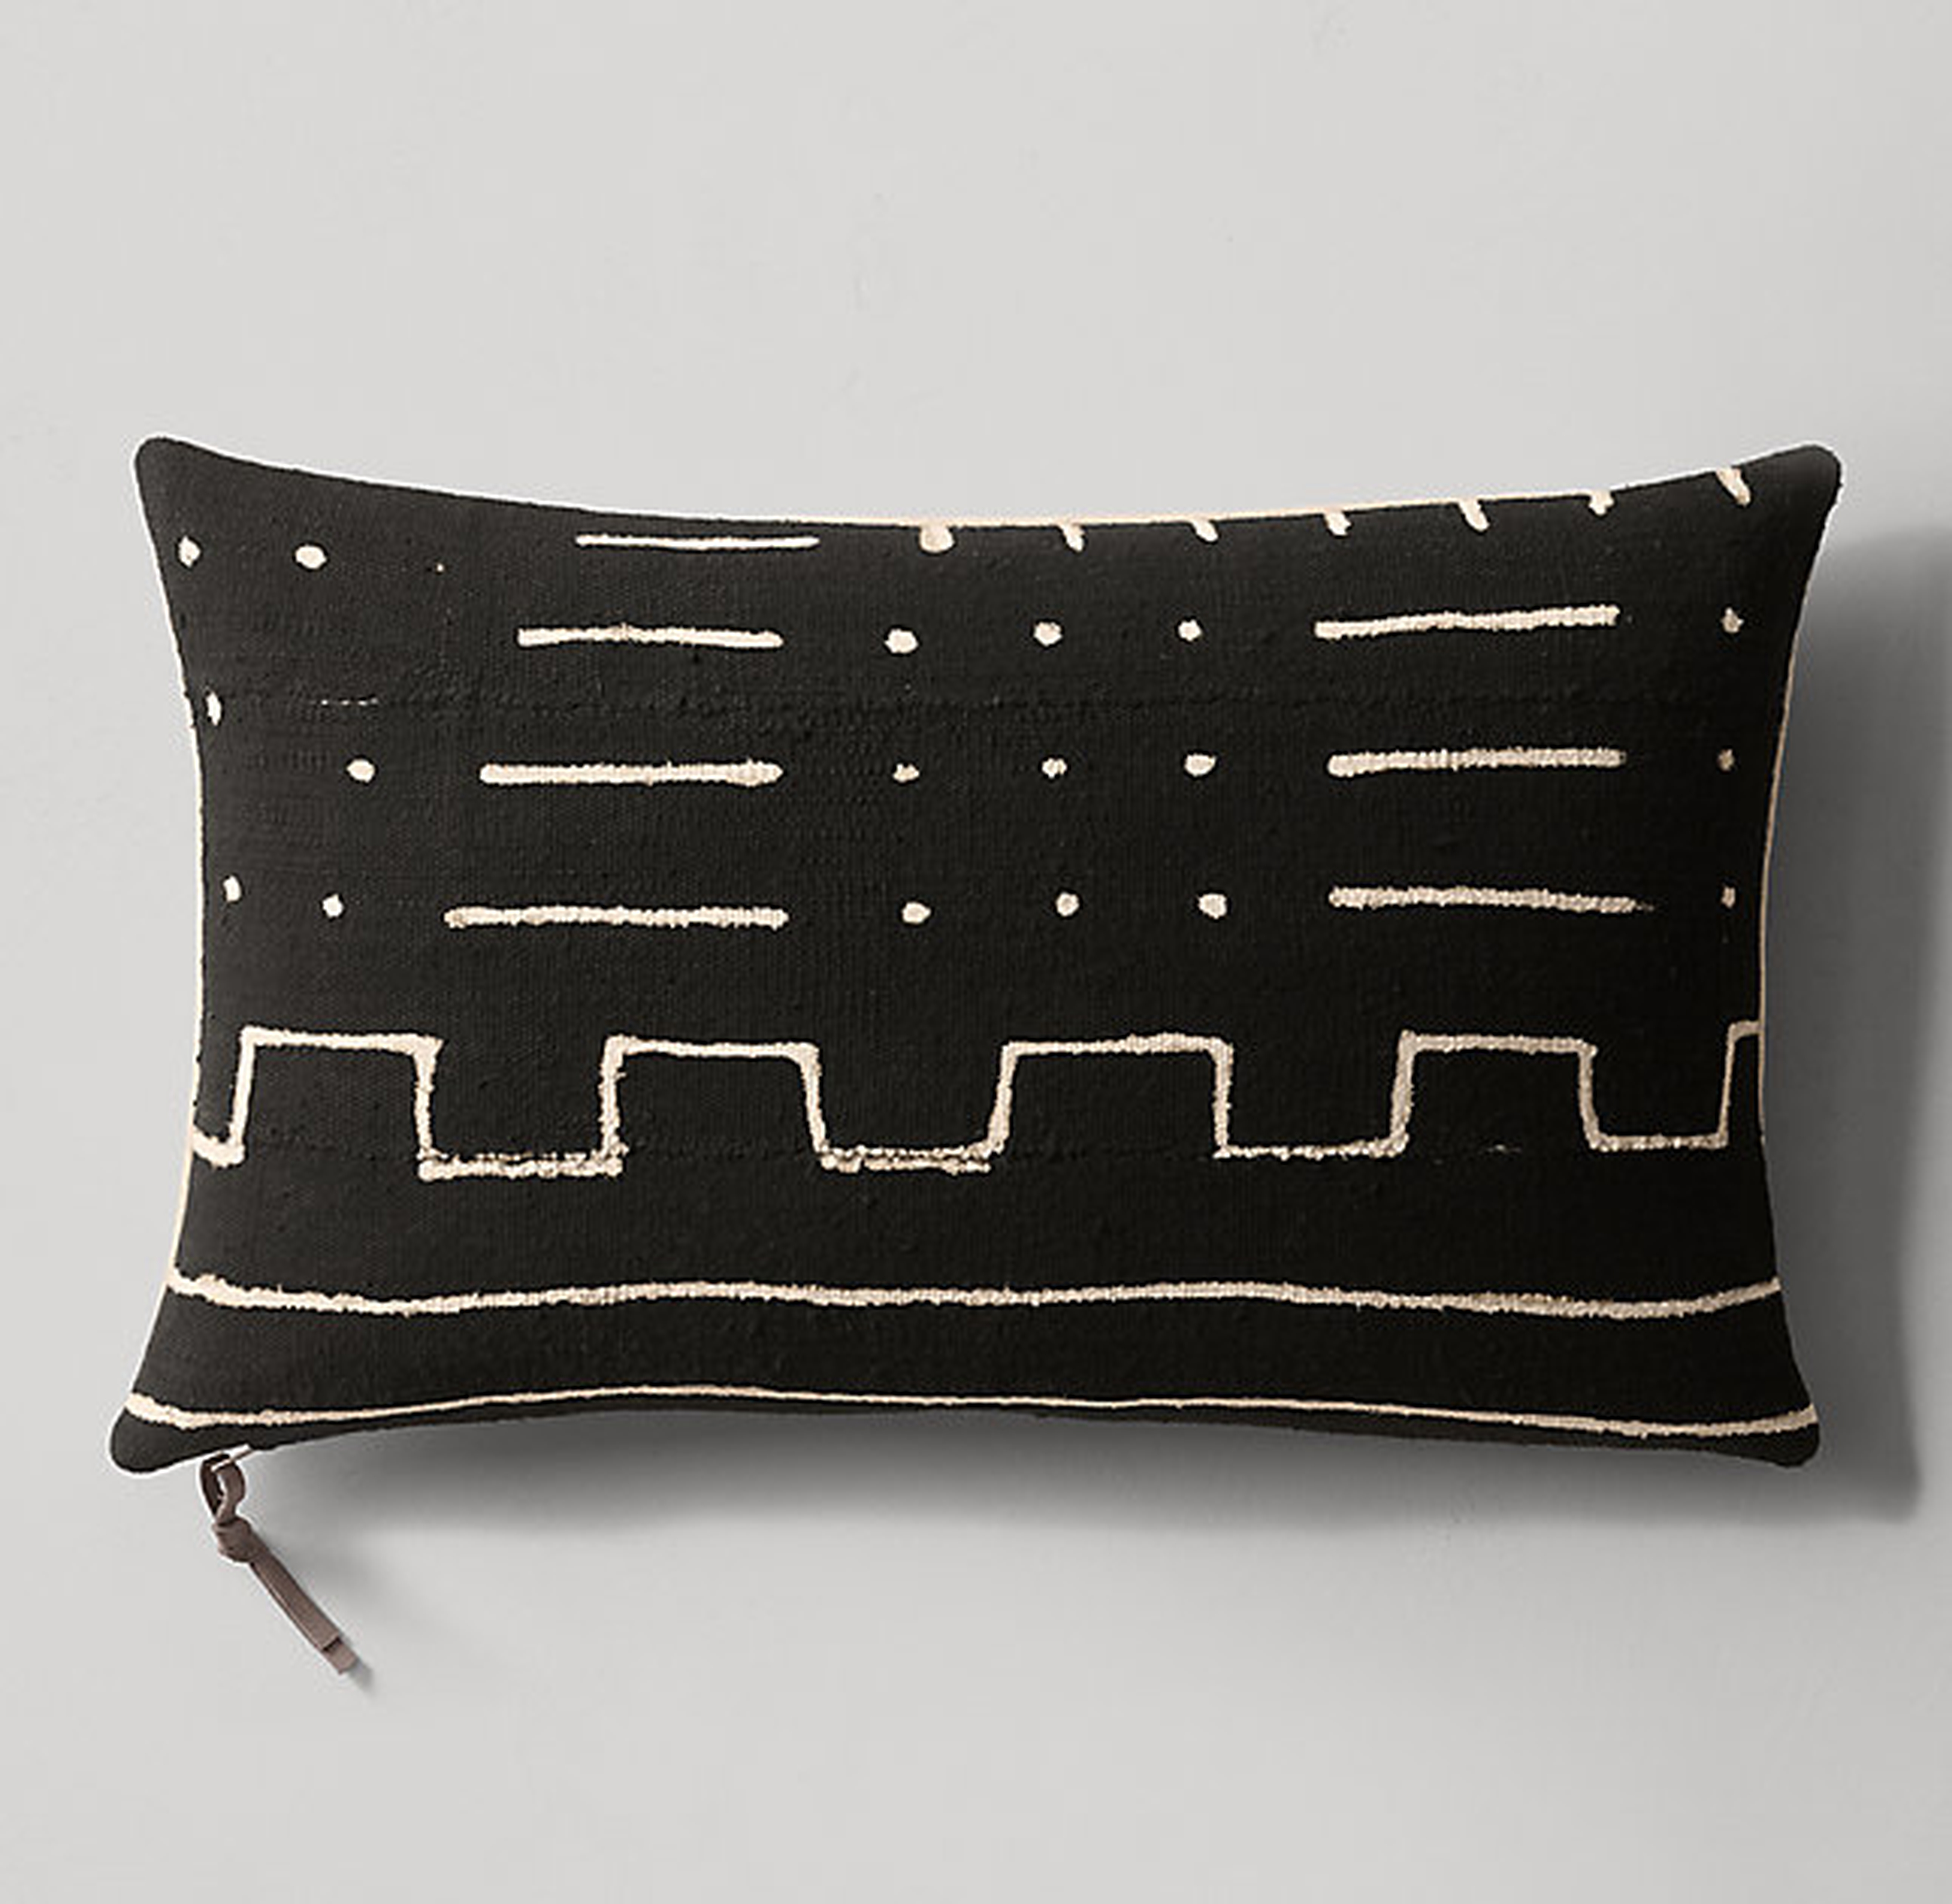 Handwoven African Mud Cloth Varied Pattern Lumbar Pillow Cover - Black/Natural - RH